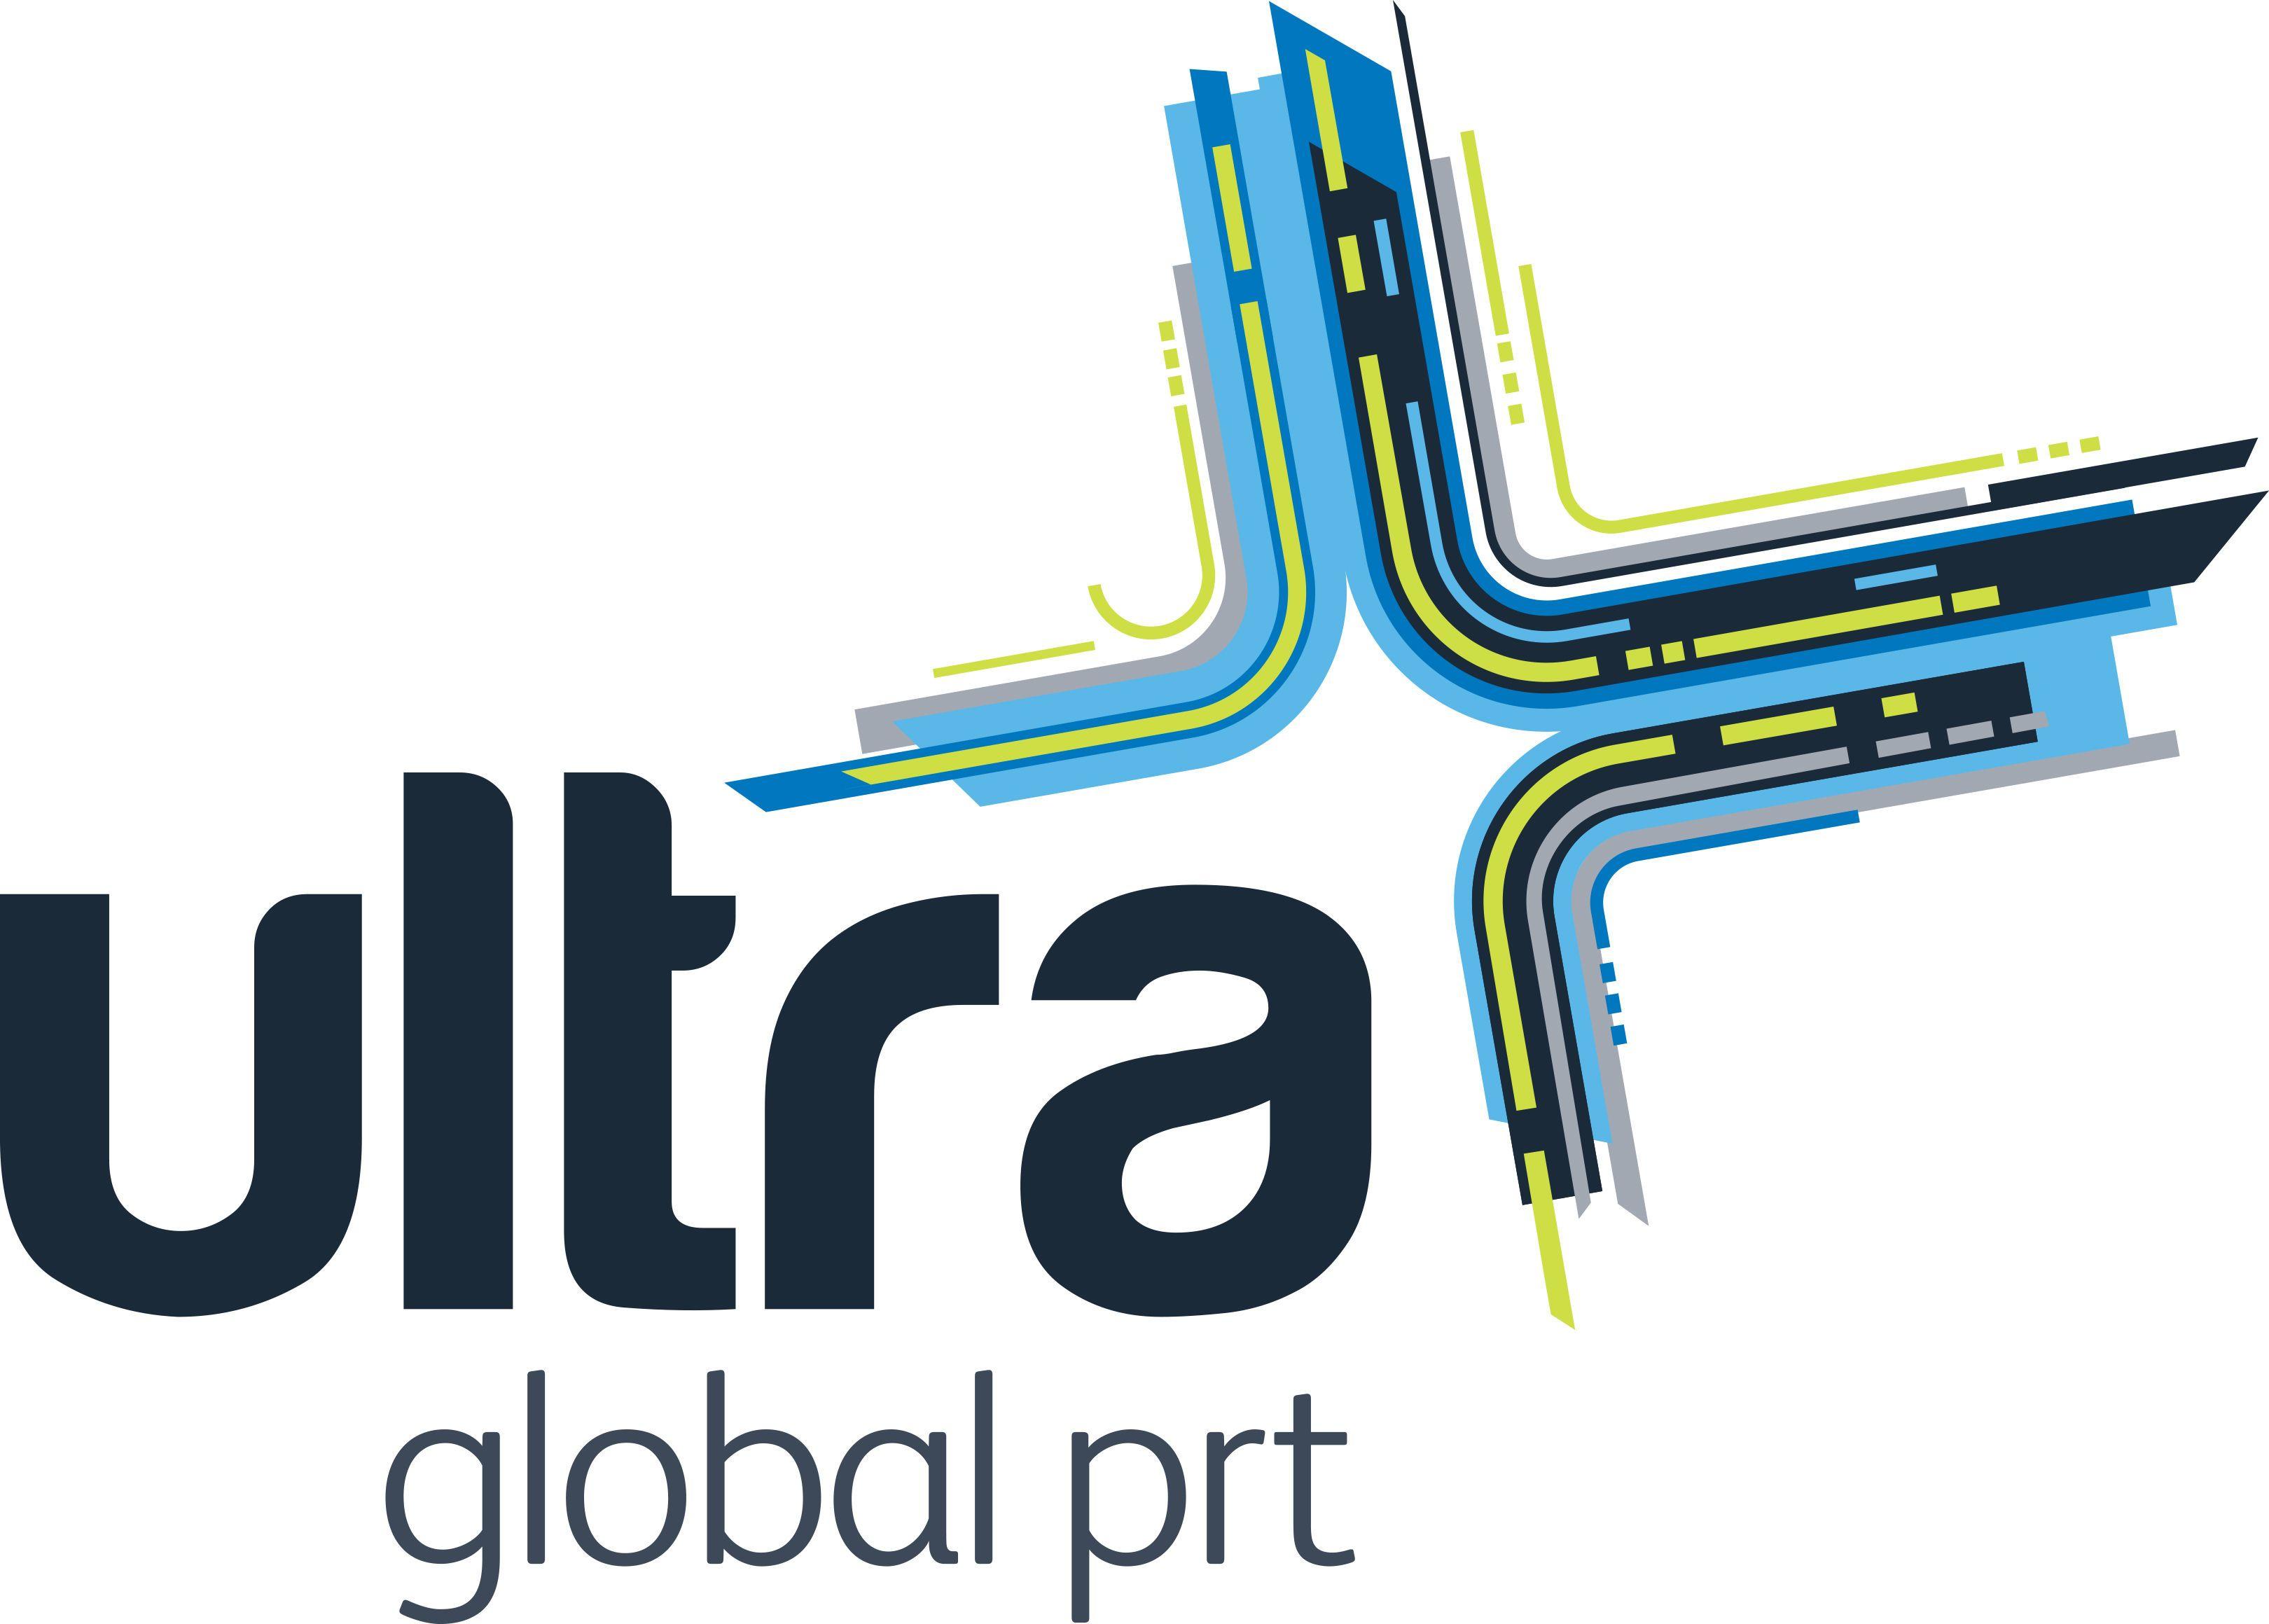 PRT Logo - Professor Martin Lowson 1938 2013. Ultra Global PRT